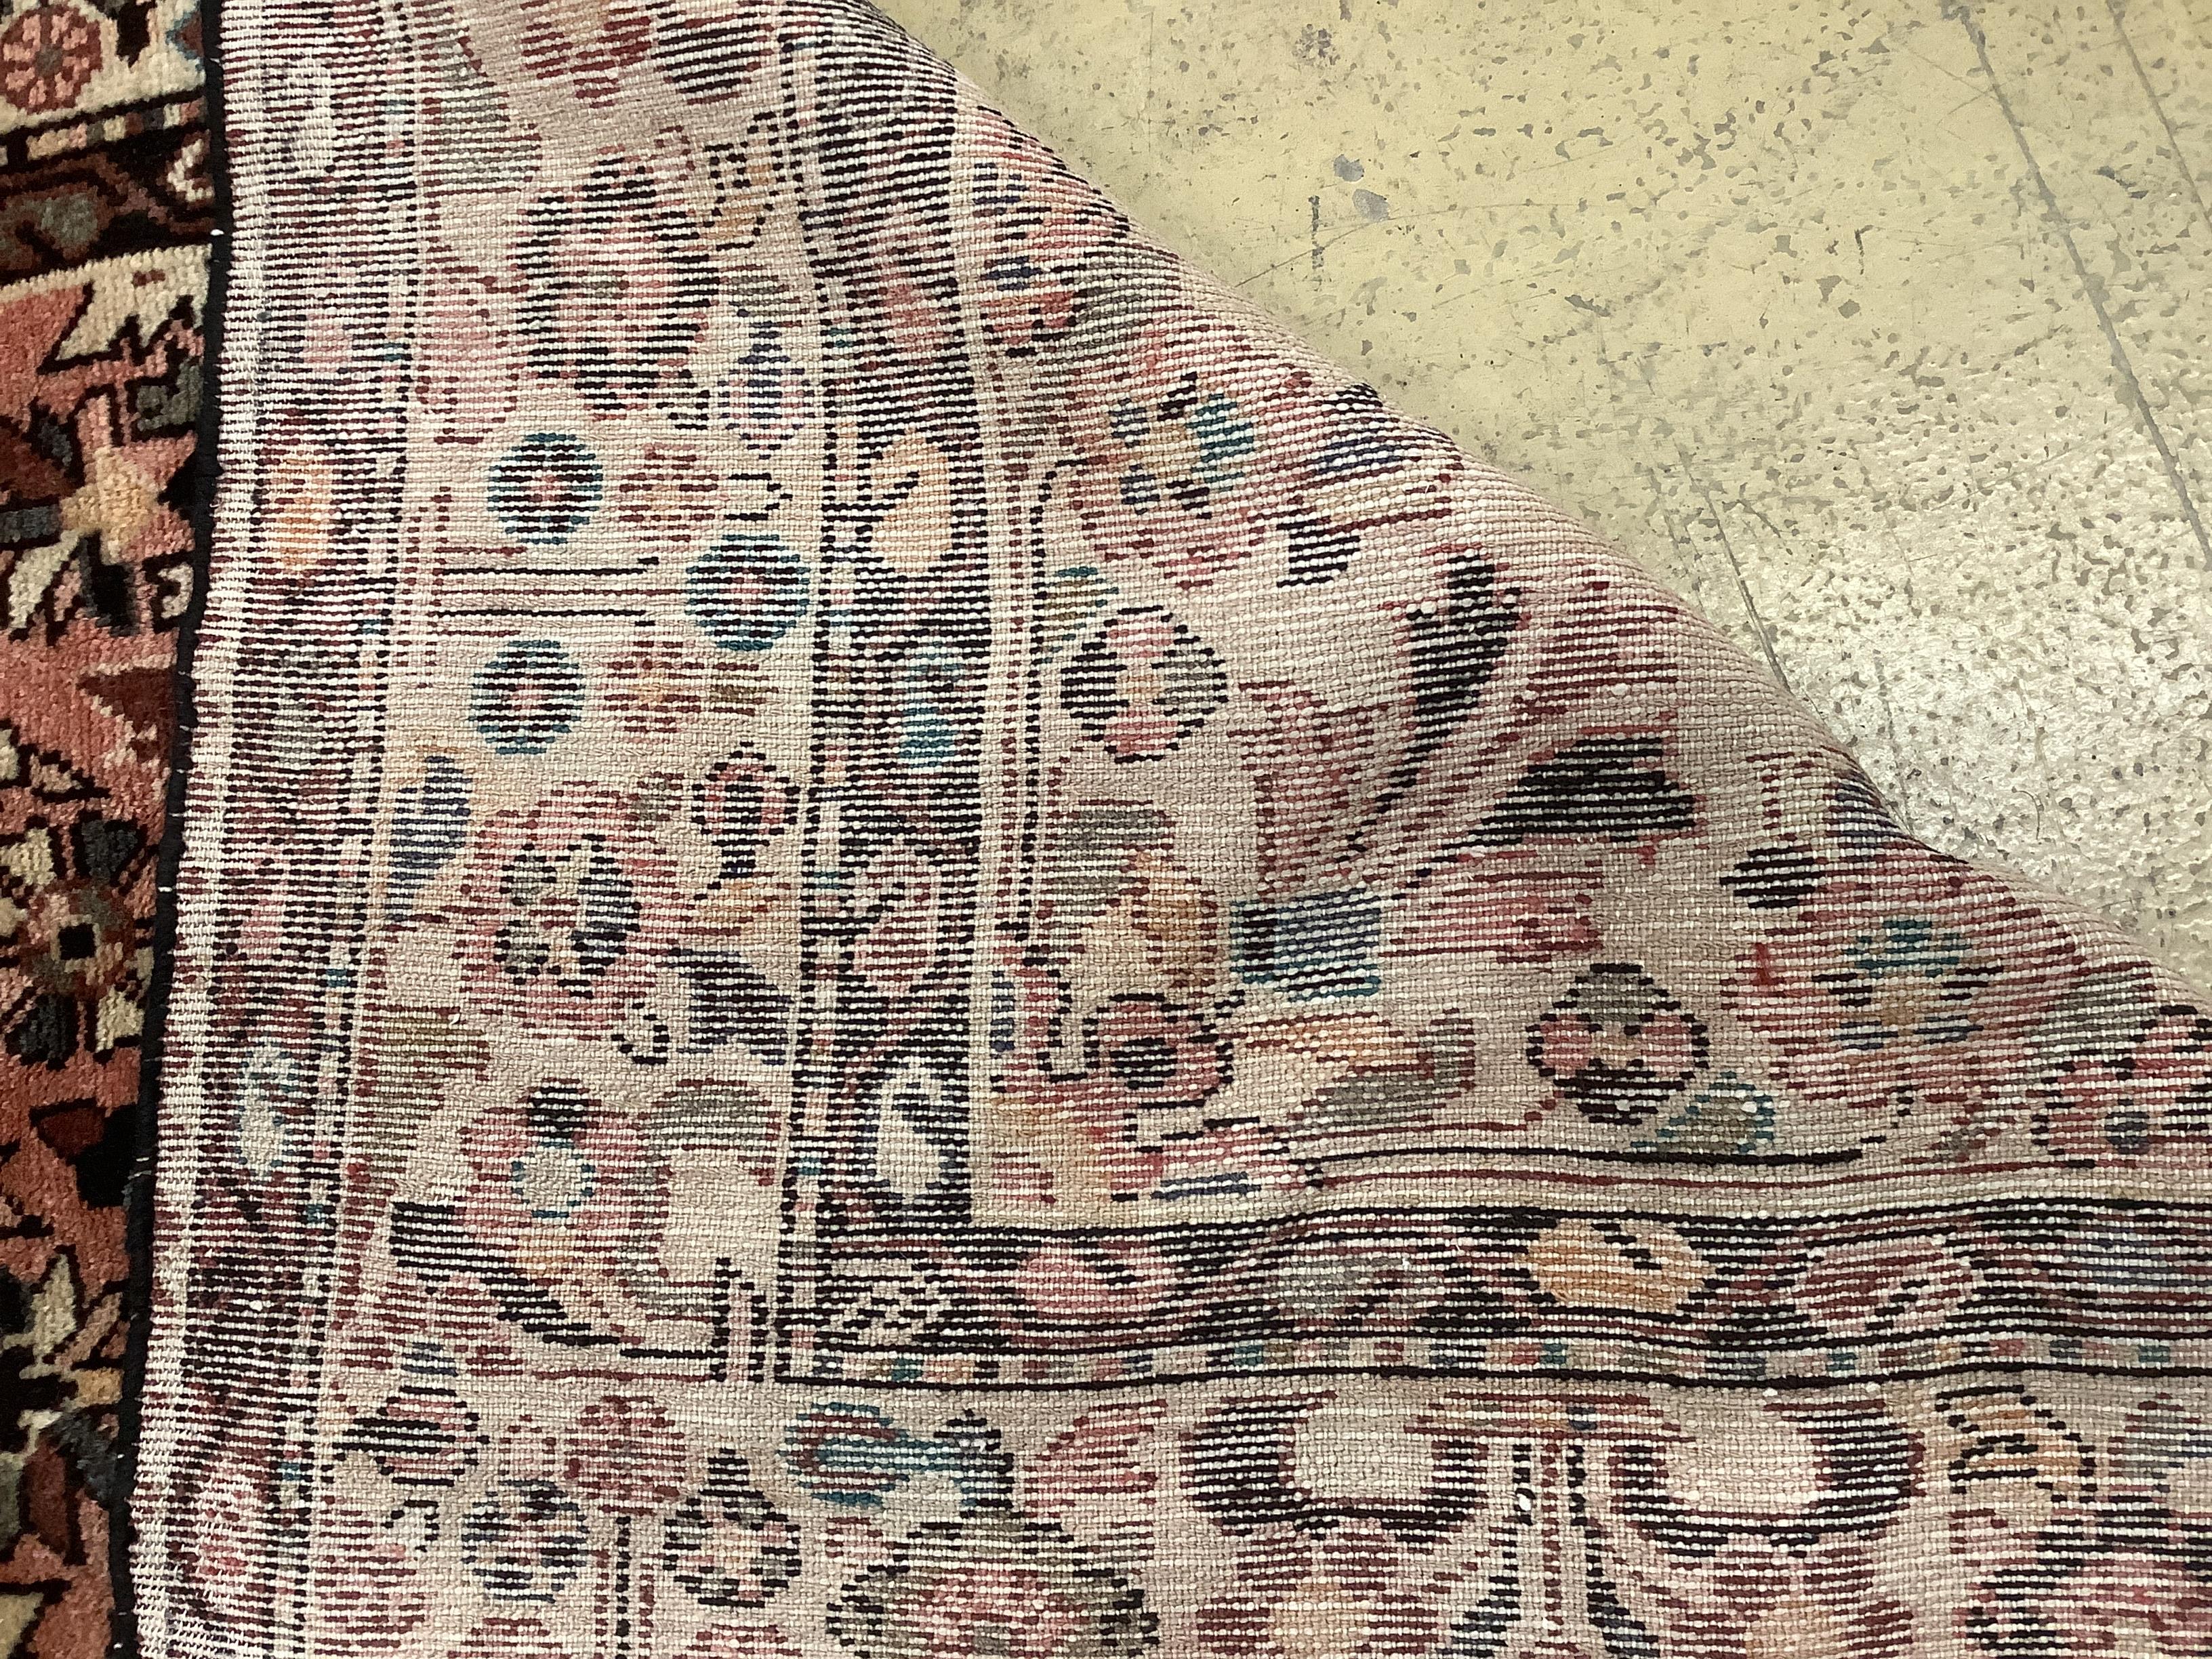 A Hussein Abad brick red ground carpet, 322 x 202cm